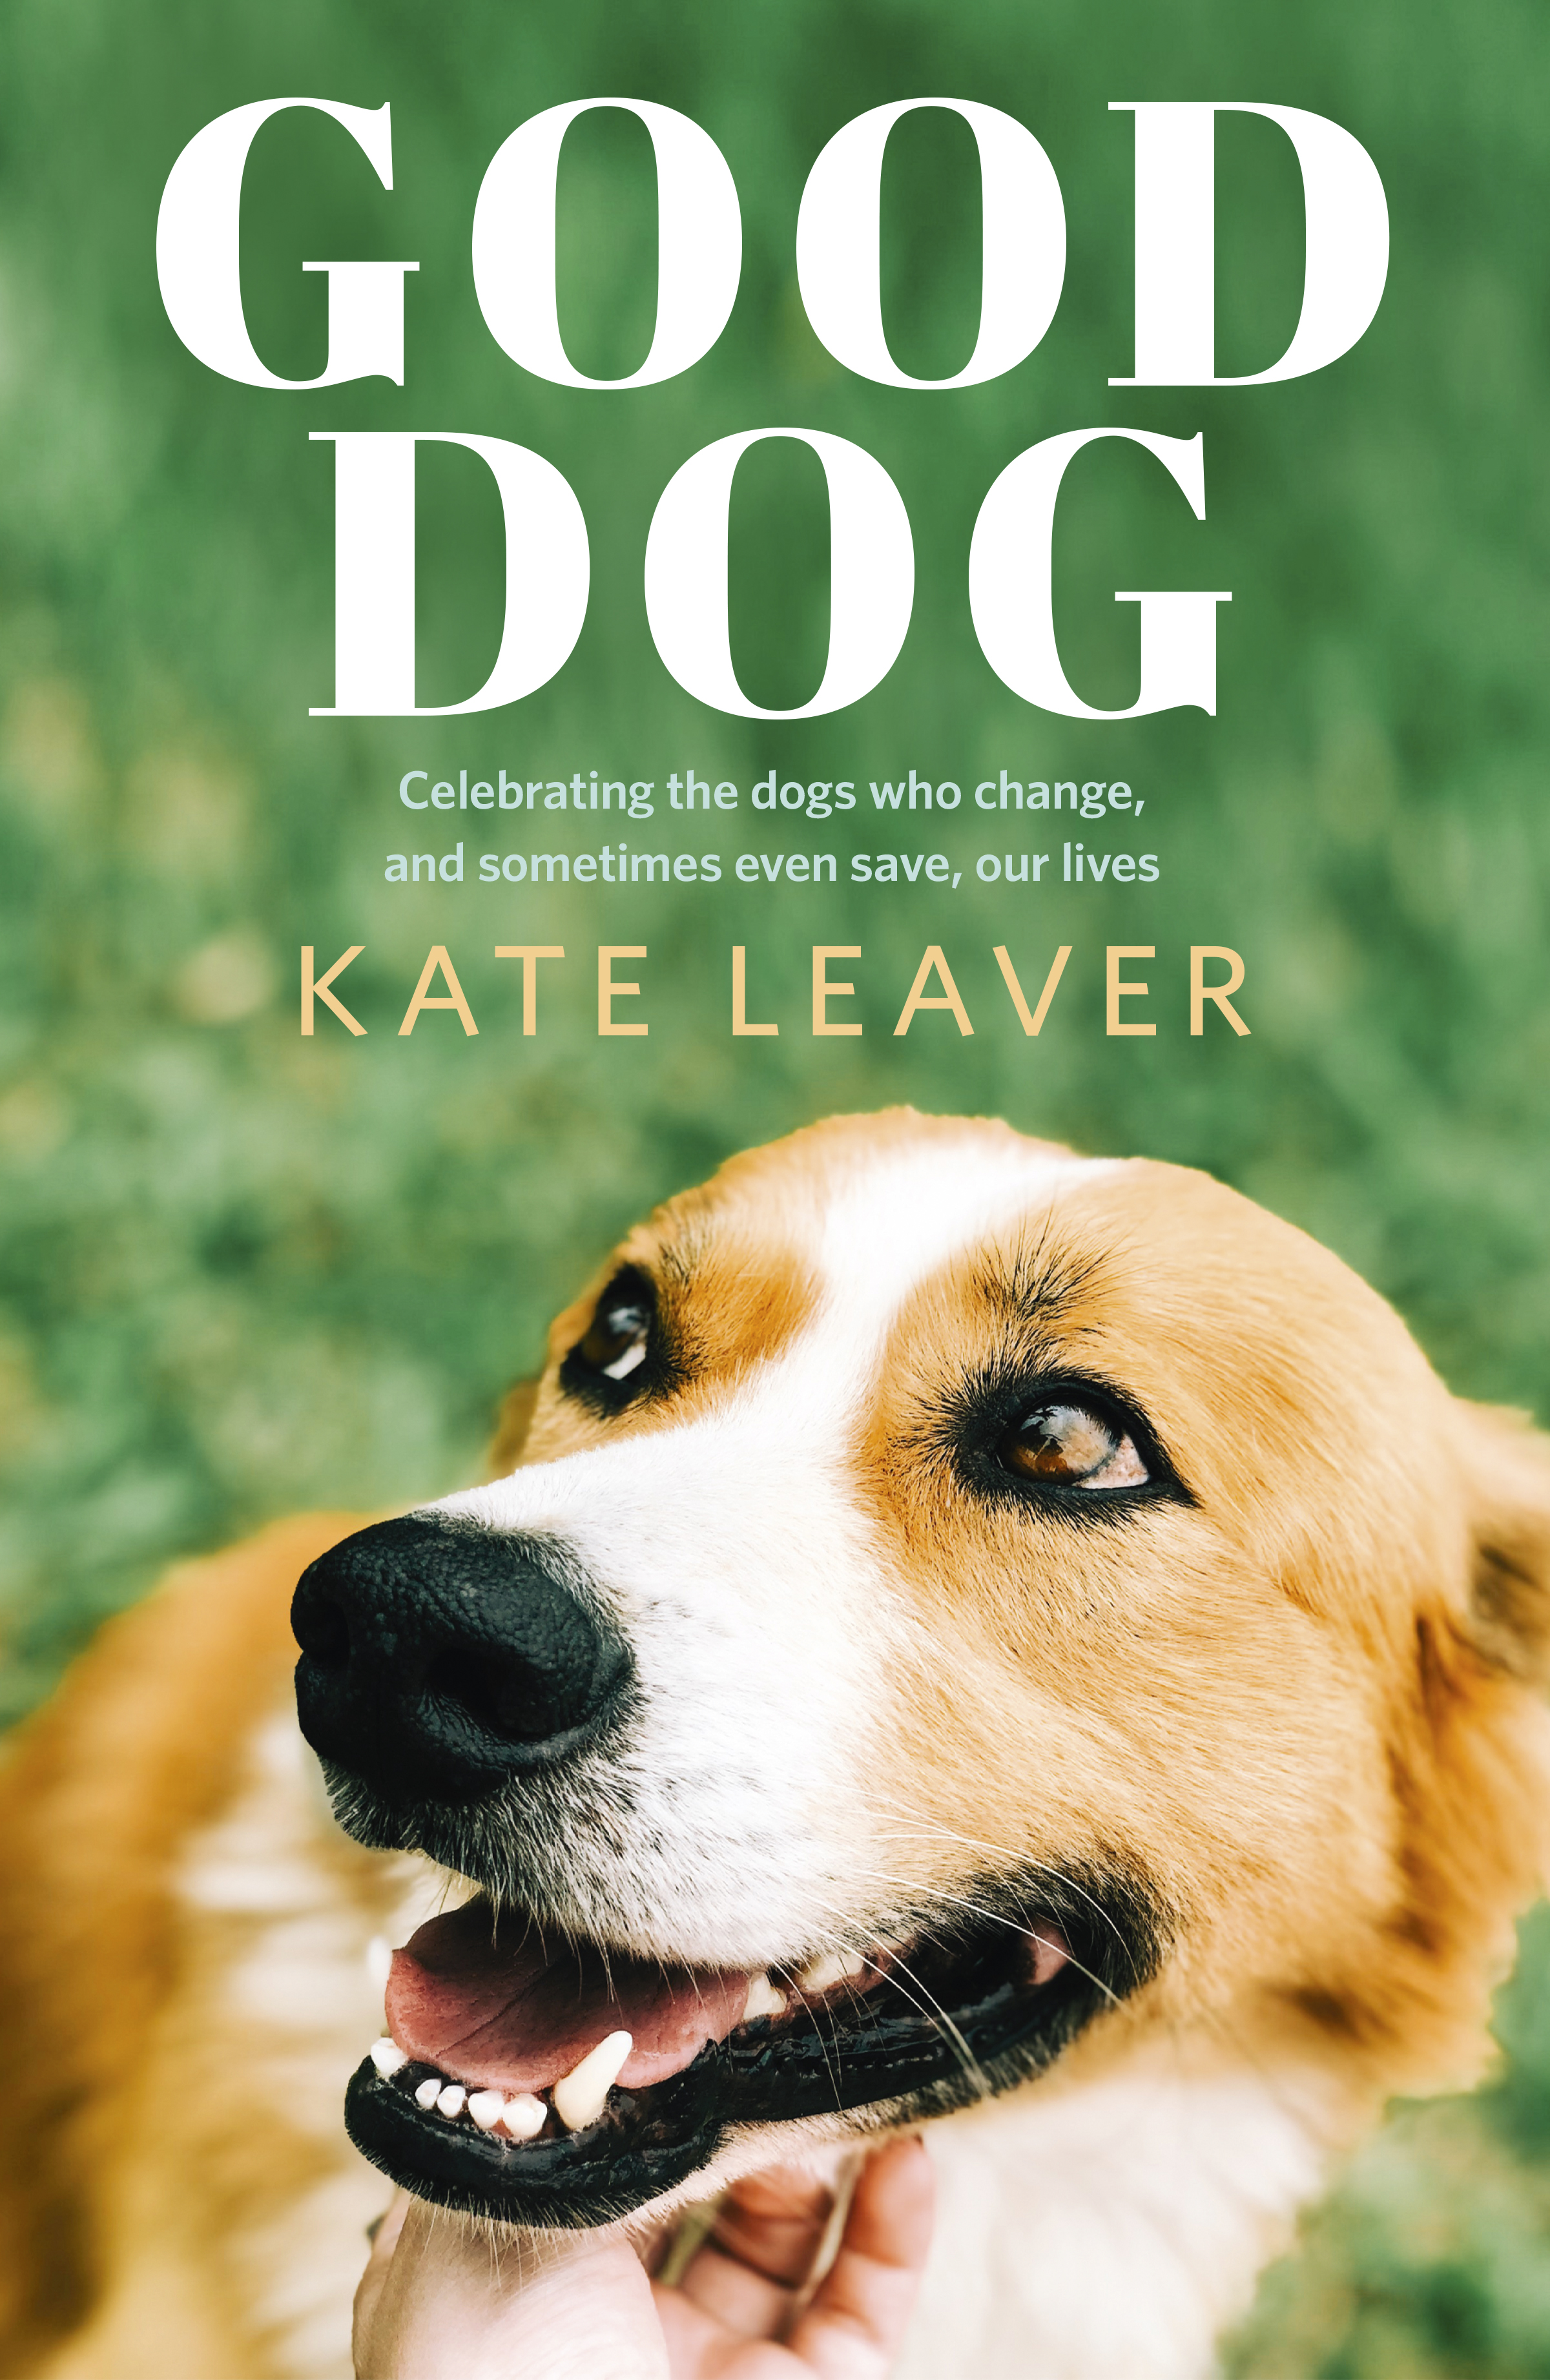 Good Dog (HarperCollins/PA)